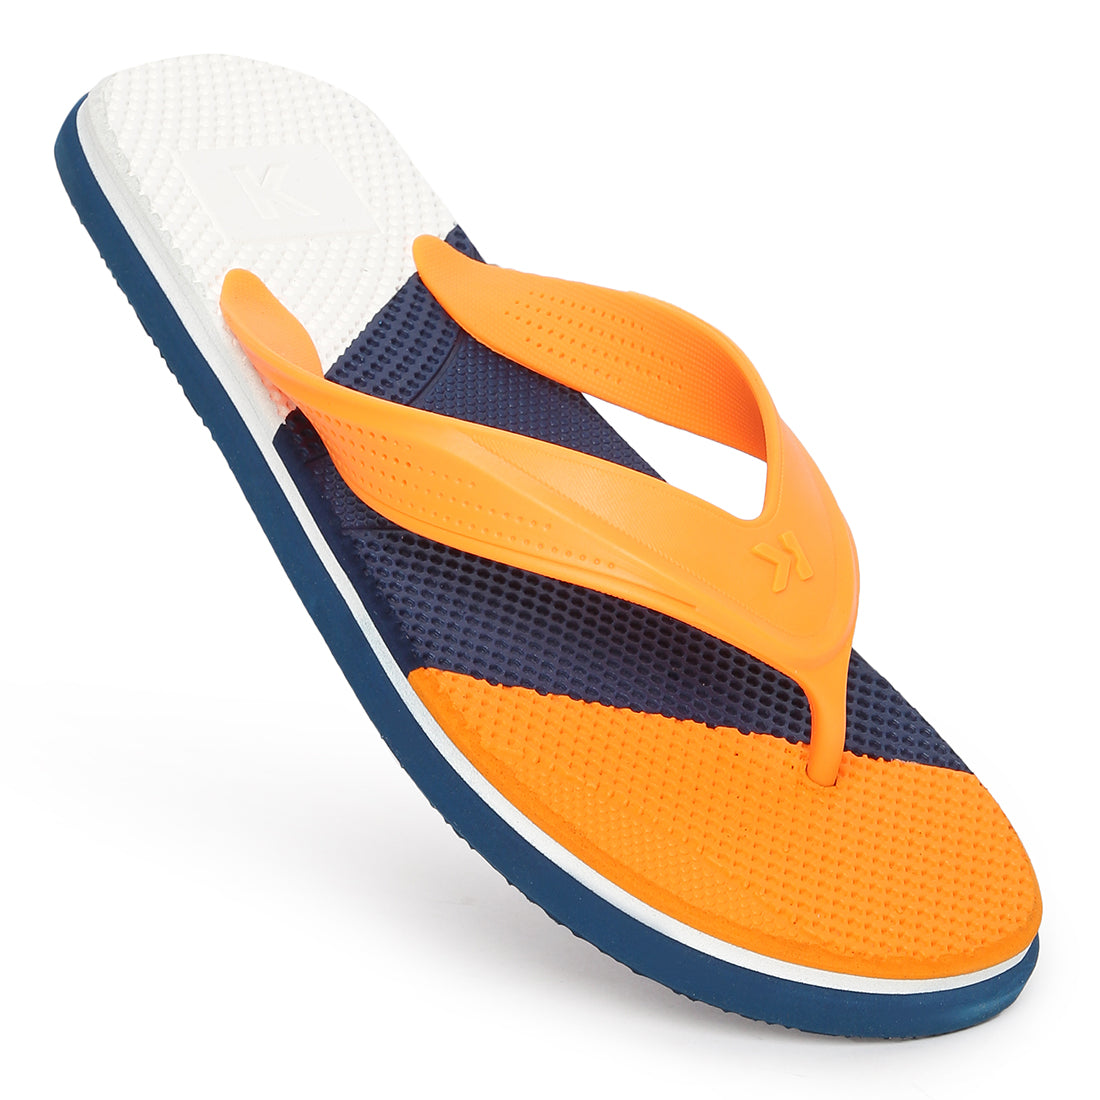 Eeken EHWG4042 Navy Blue And Orange Ultra-Comfortable And Stylish Lightweight Orange Casual Flip Flops For Men